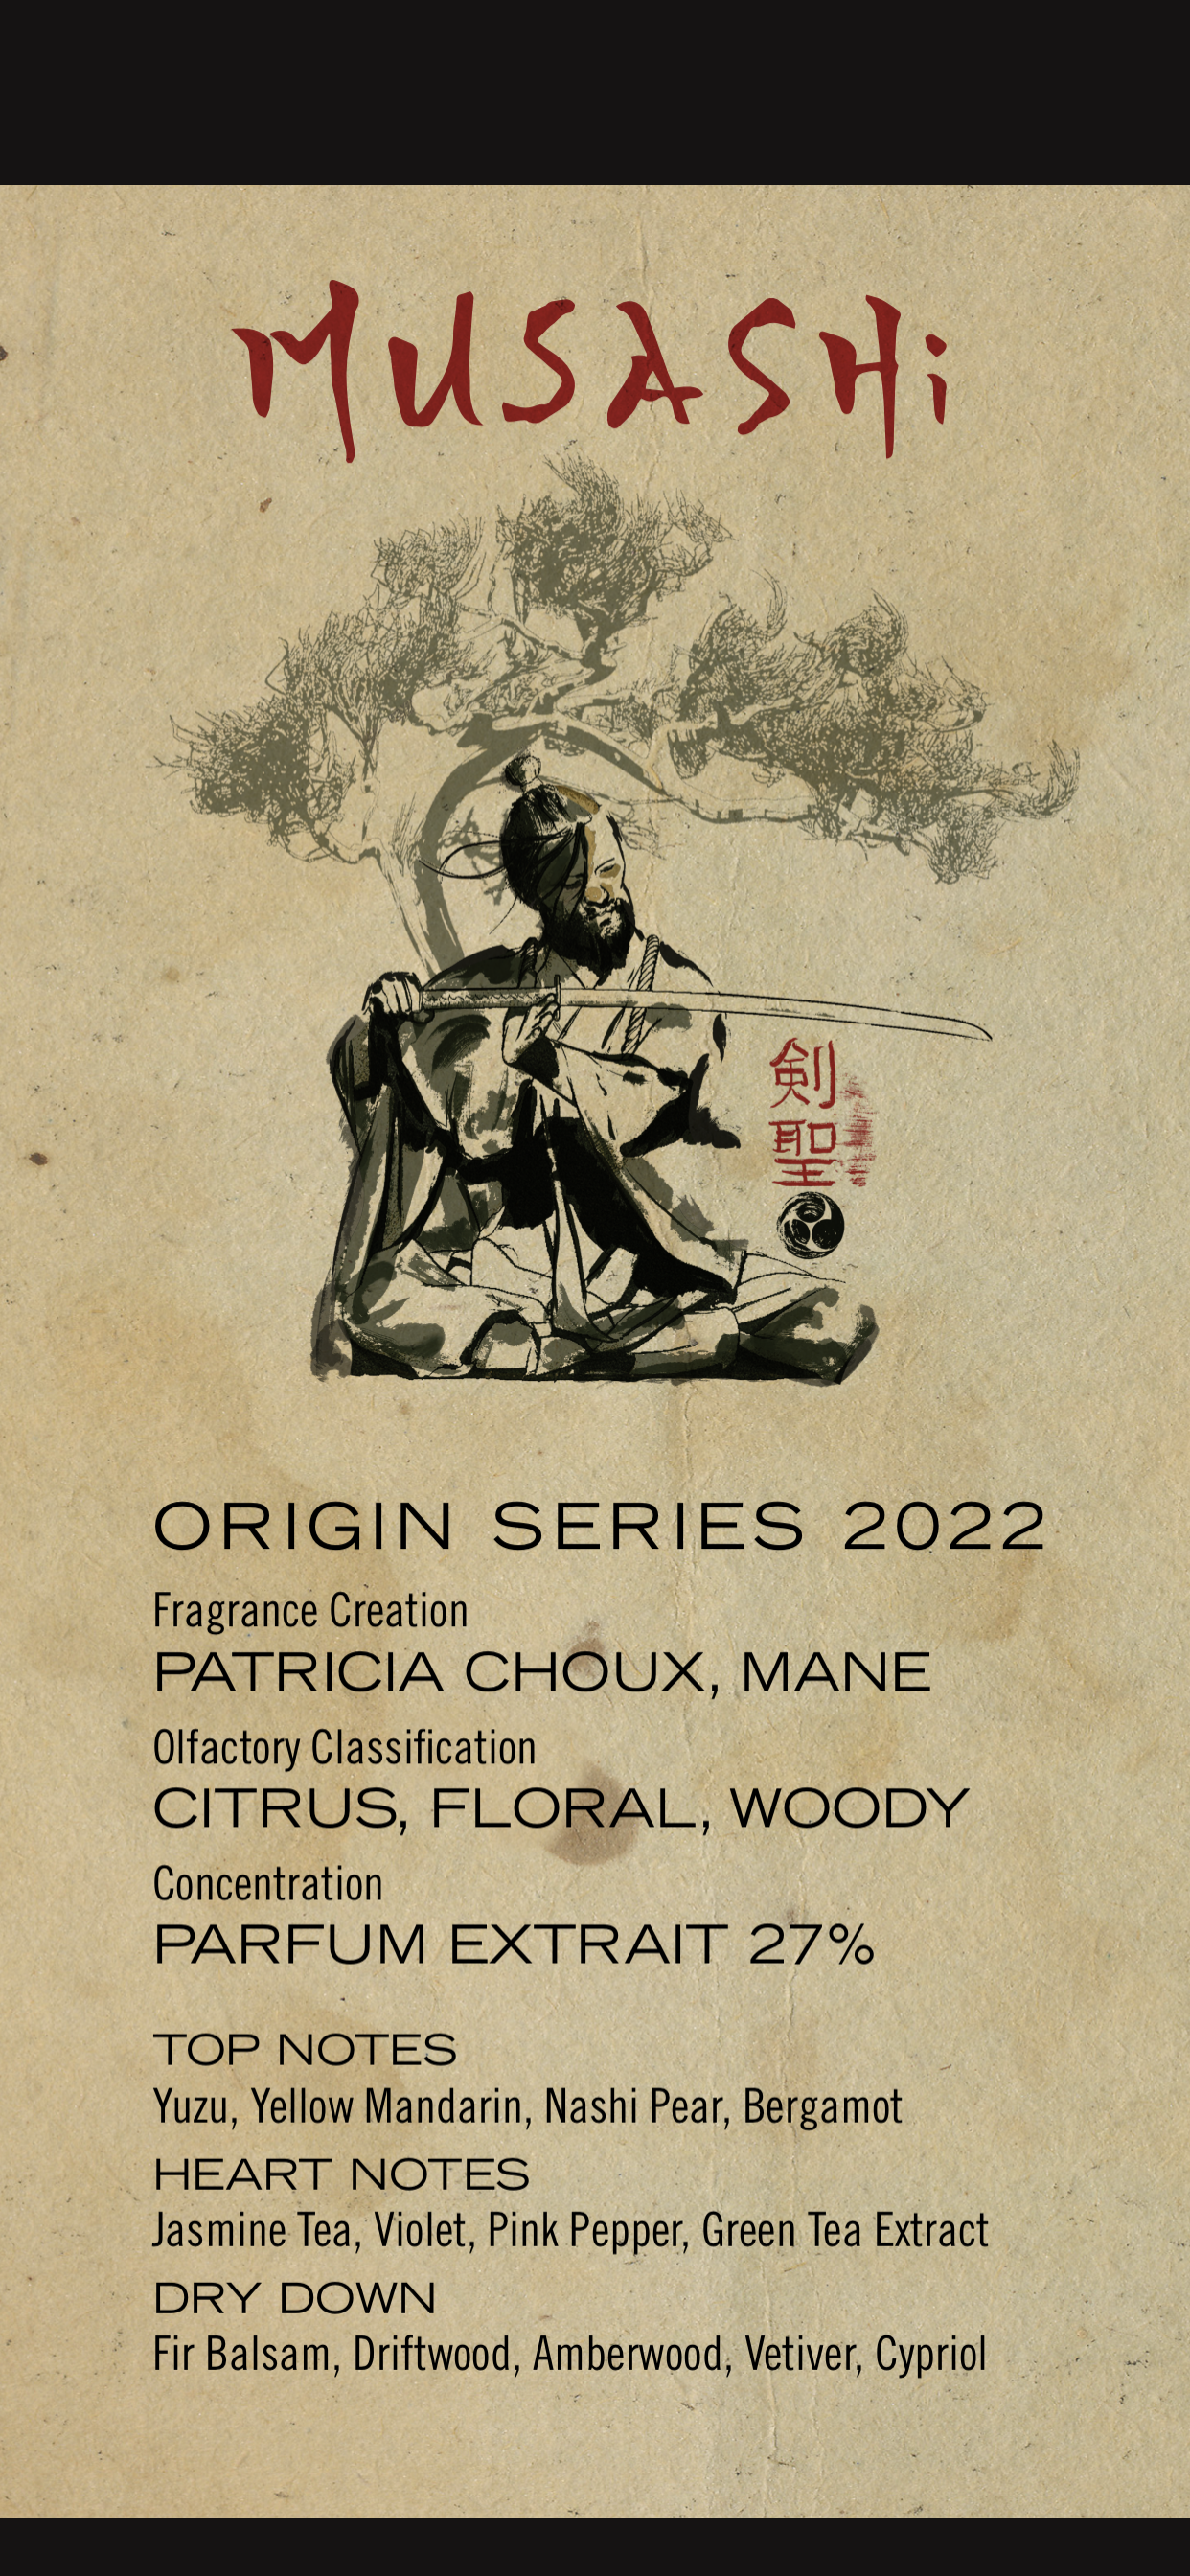 Musashi Origins Series Parfum Extrait